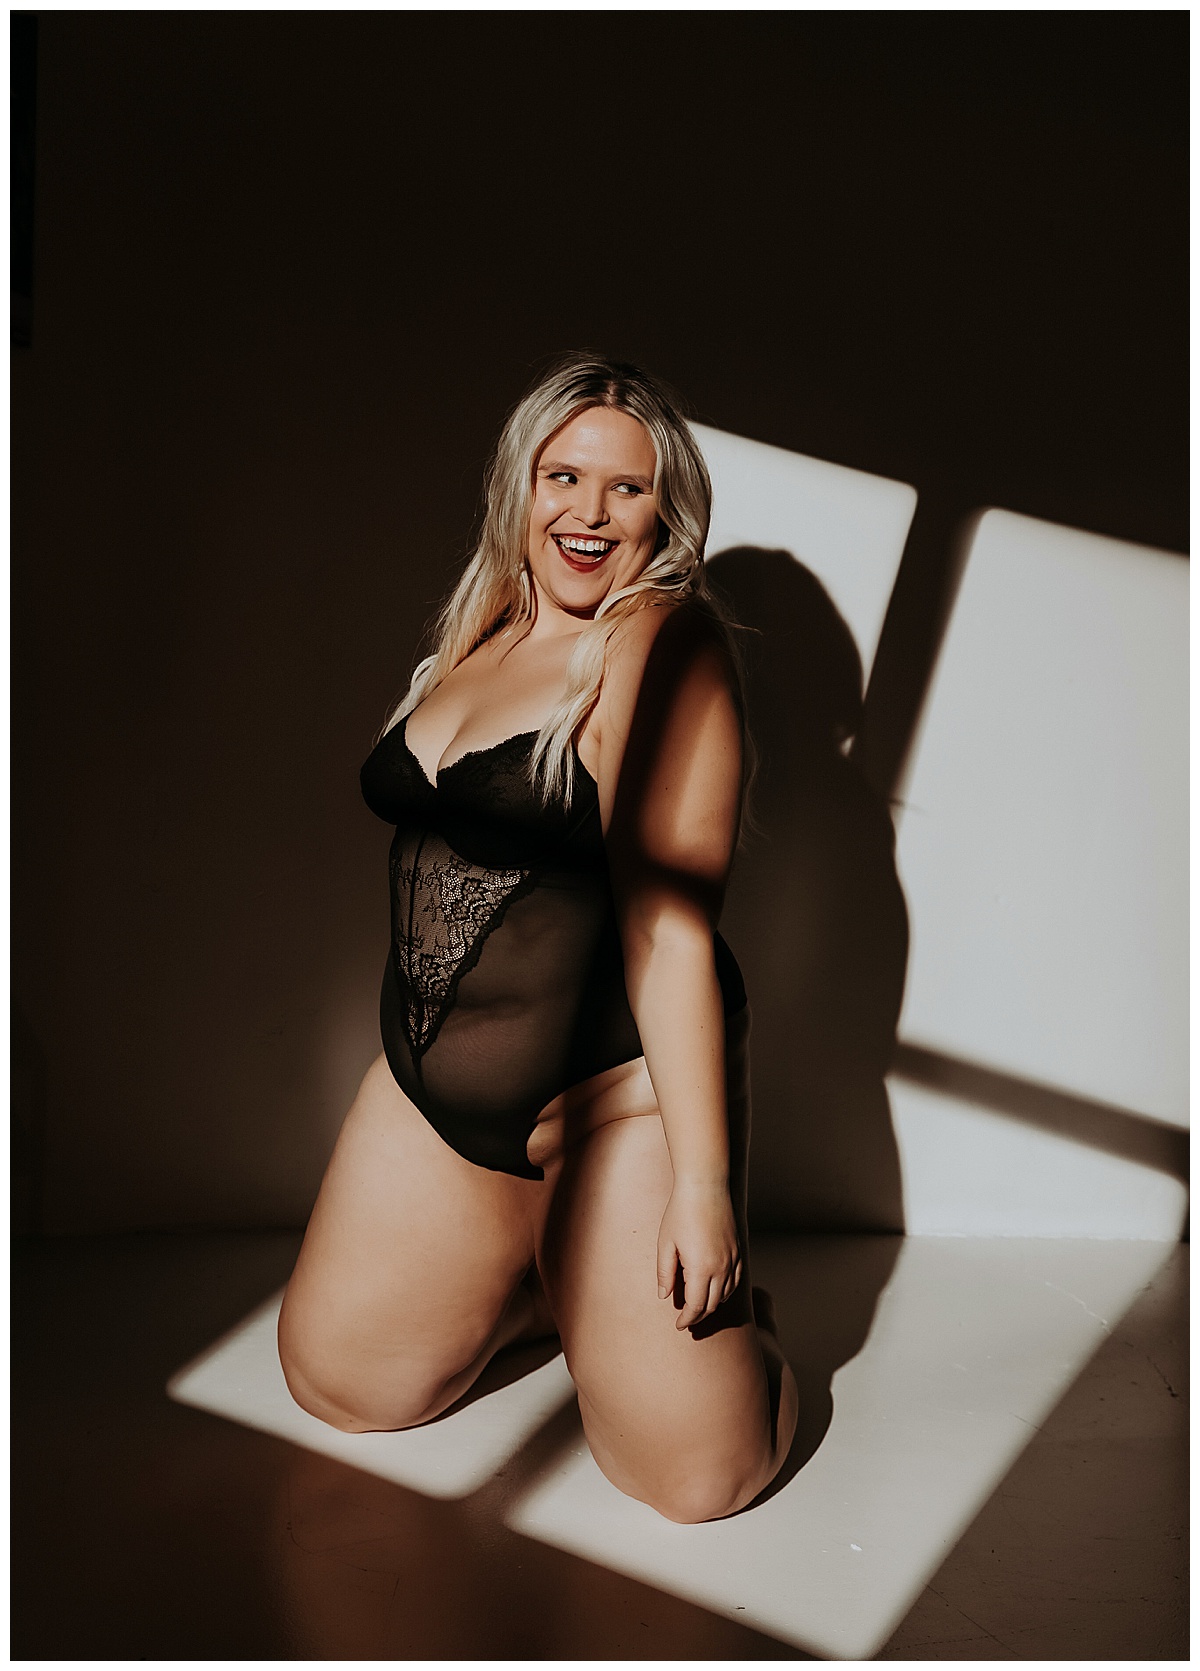 Blonde smiles big in black lingerie for Minneapolis Boudoir Photographer